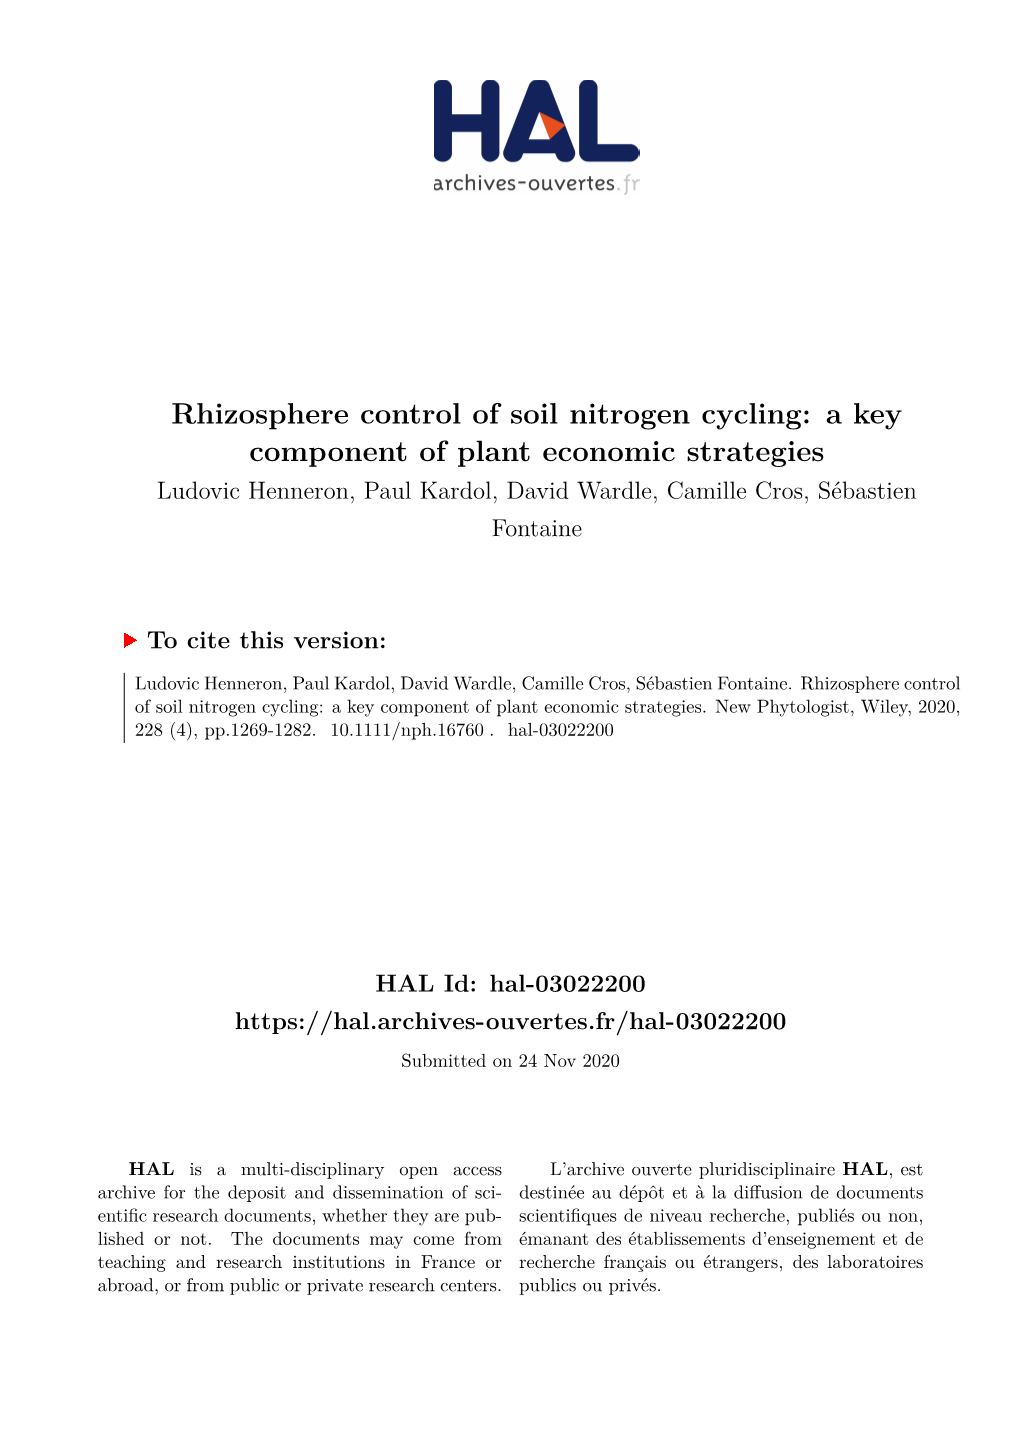 Rhizosphere Control of Soil Nitrogen Cycling: a Key Component of Plant Economic Strategies